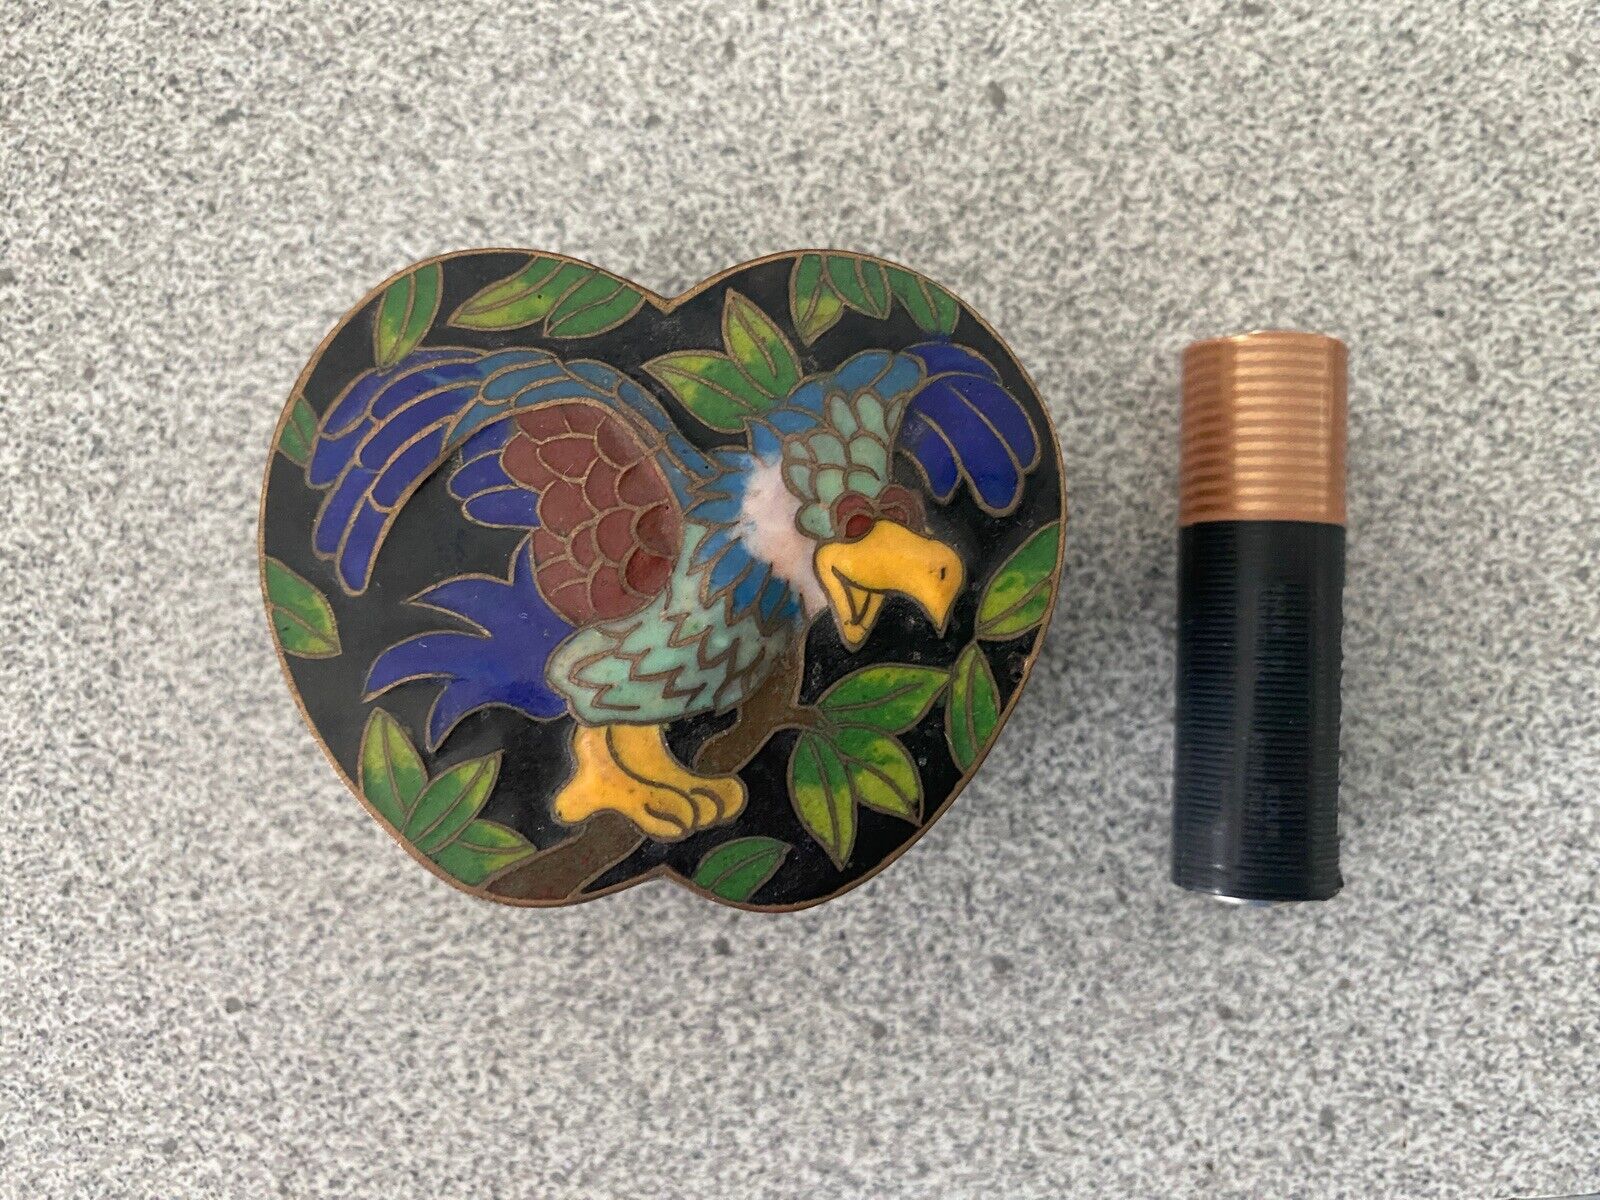 Vintage Chinese Apple Shaped 2 3/8” Cloisonné Pill Trinket Box w/Raised Bird